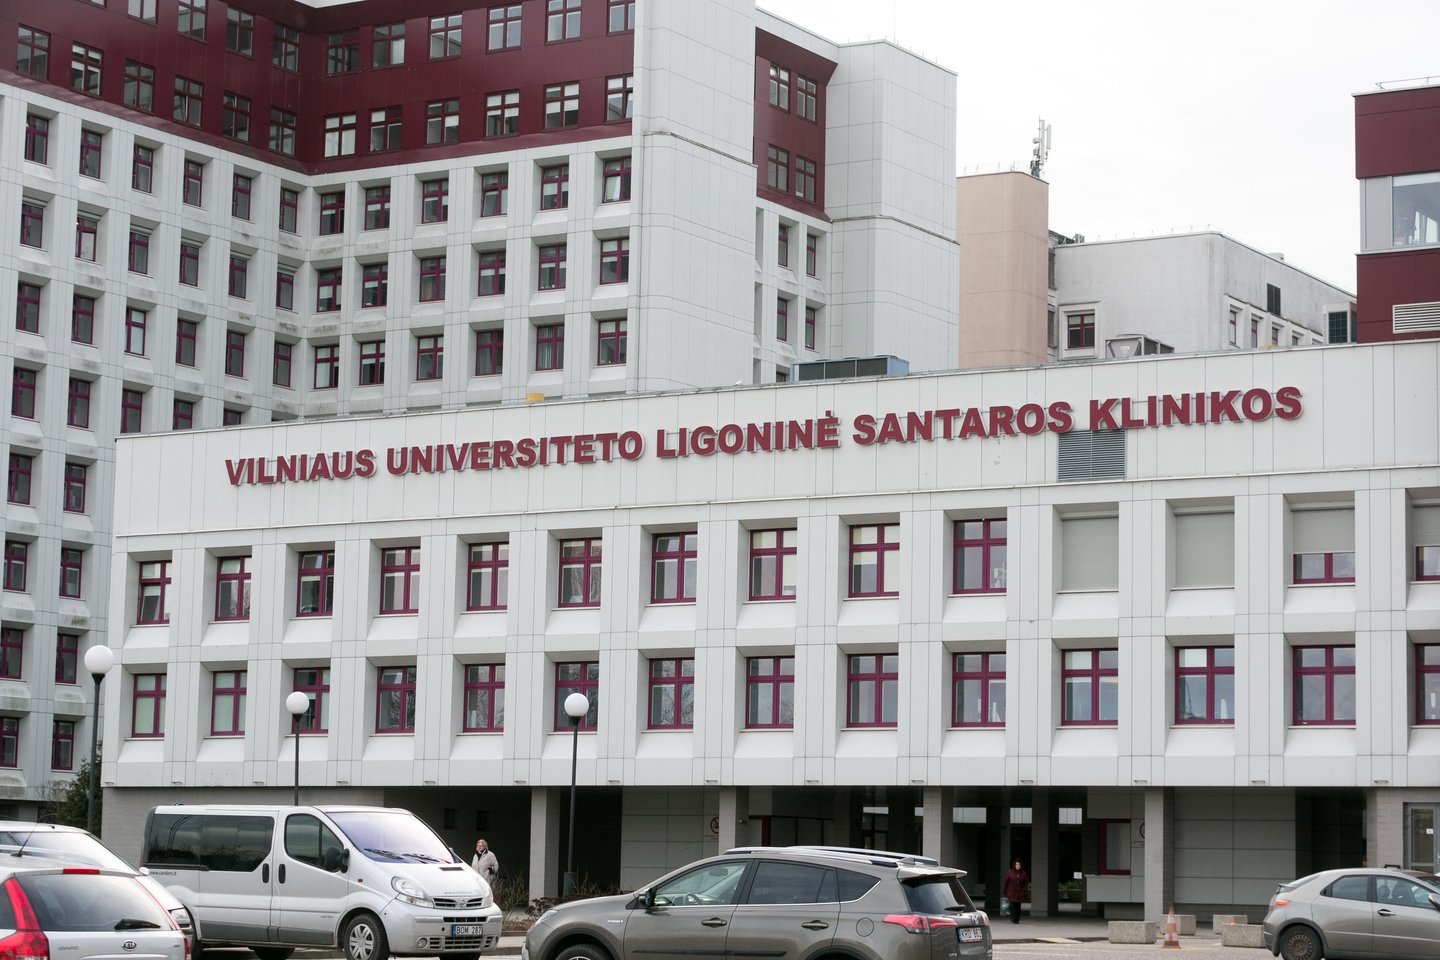 Vilniaus universiteto ligoninė Santaros klinikos<br>T.Bauro nuotr.